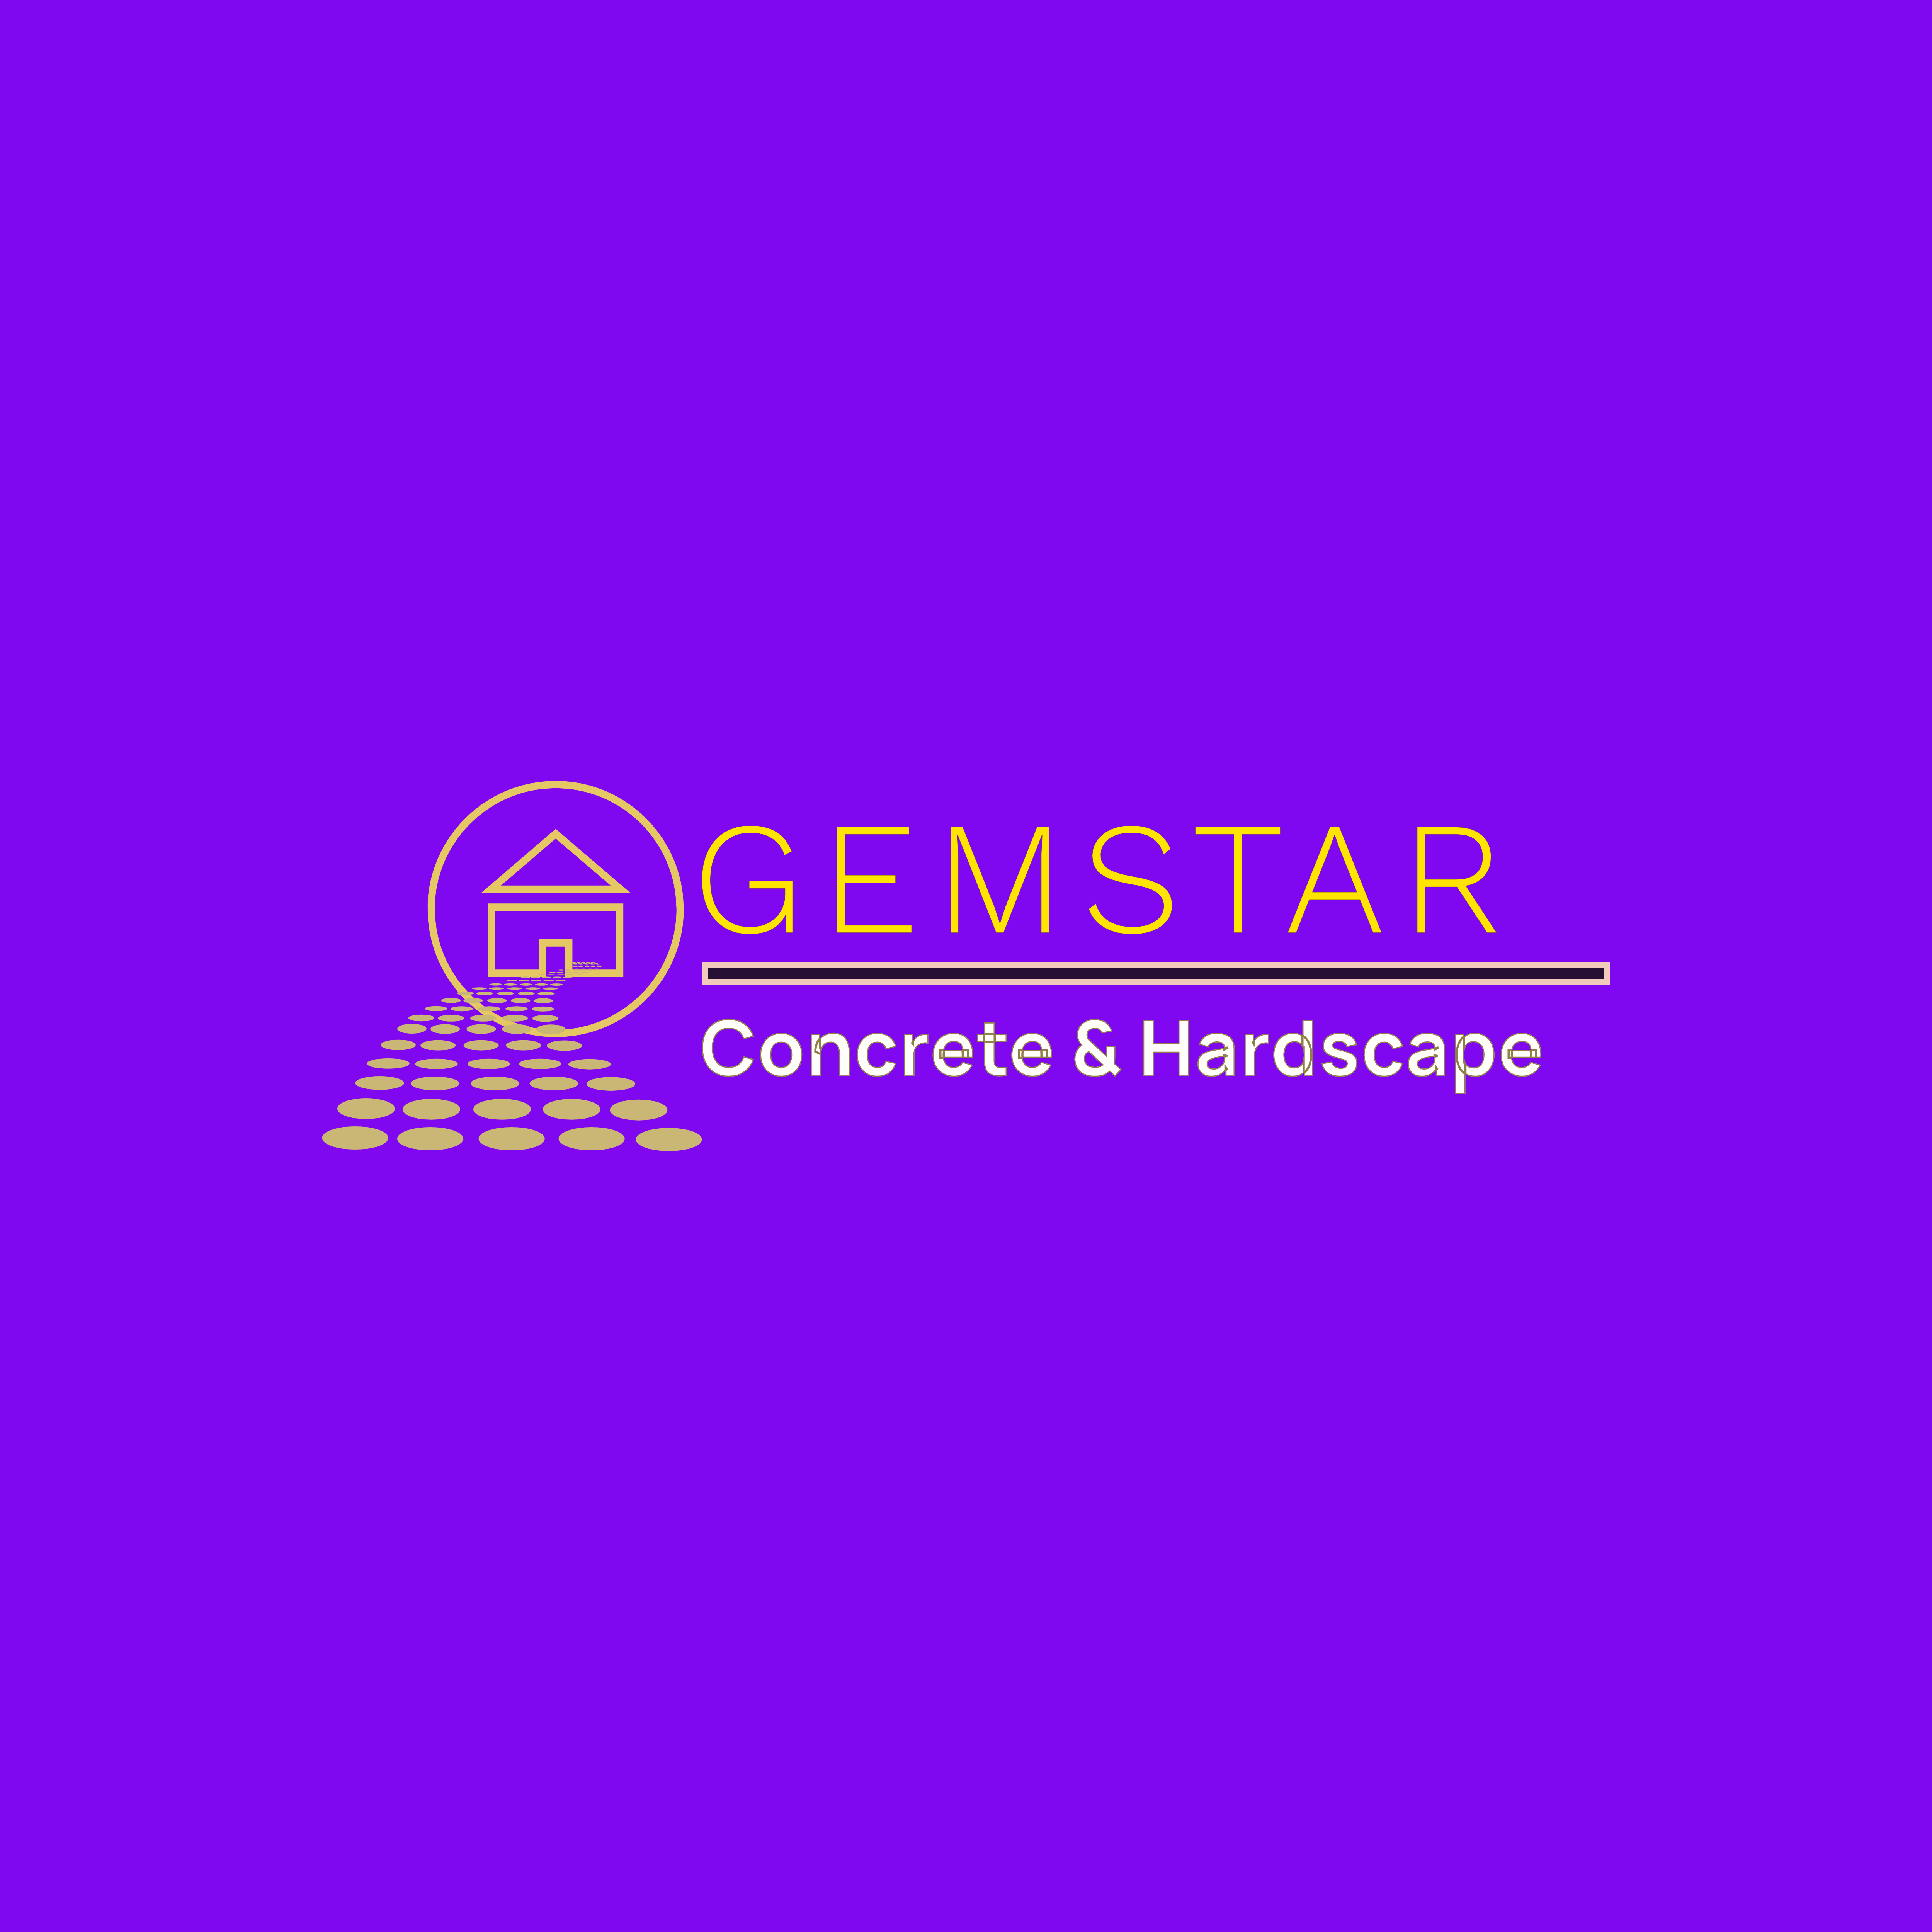 Gemstar Contracting's logo